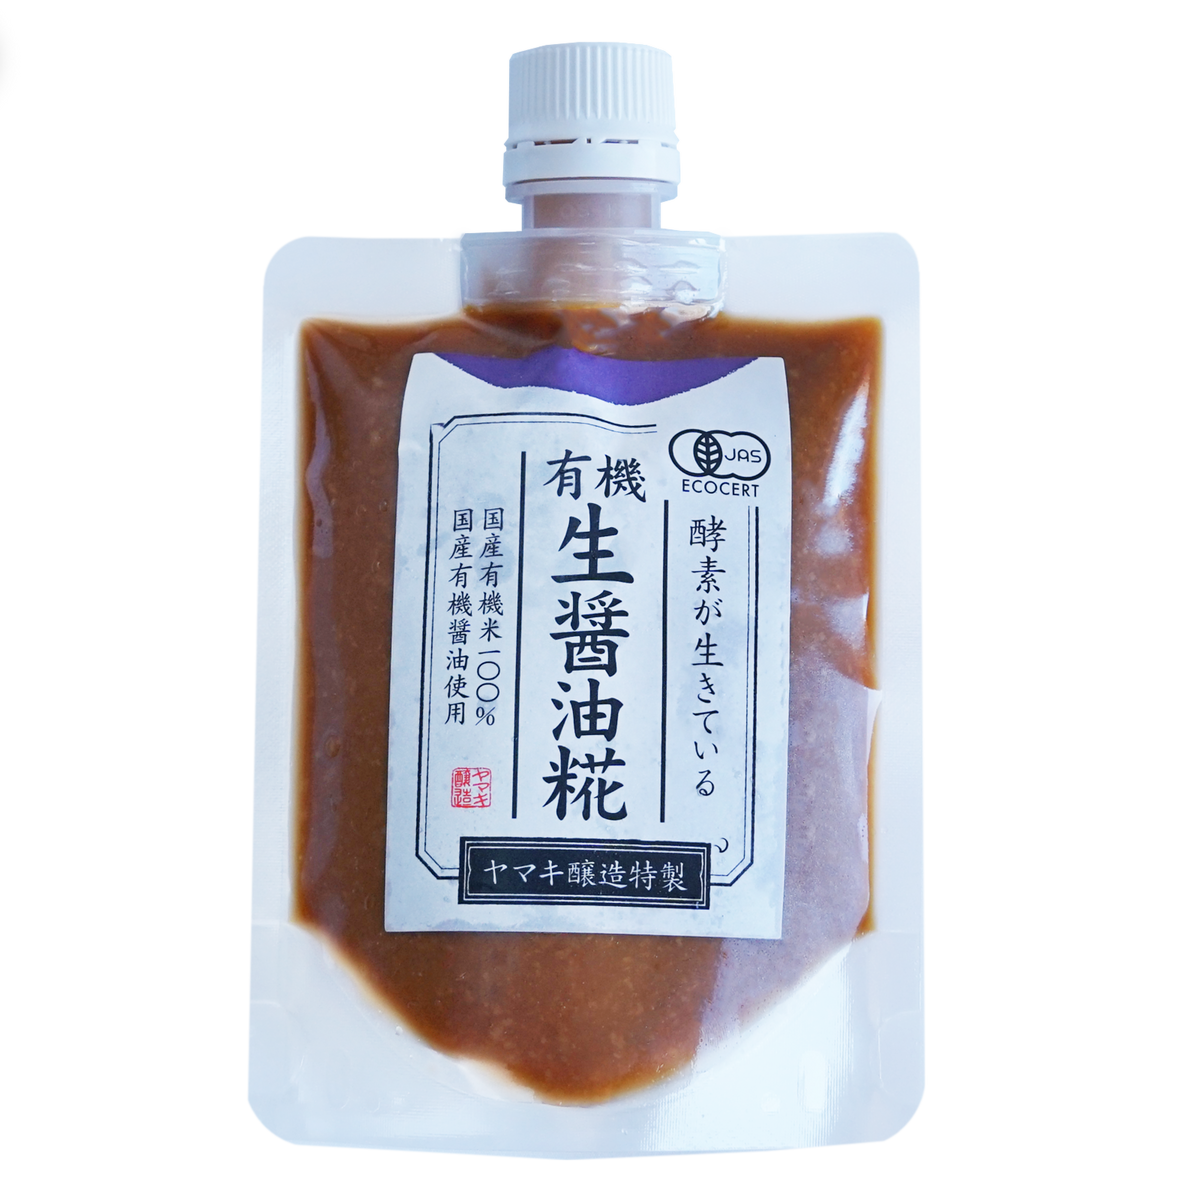 Certified Organic Raw Soy Sauce Malt from Japan (170g) - Horizon Farms